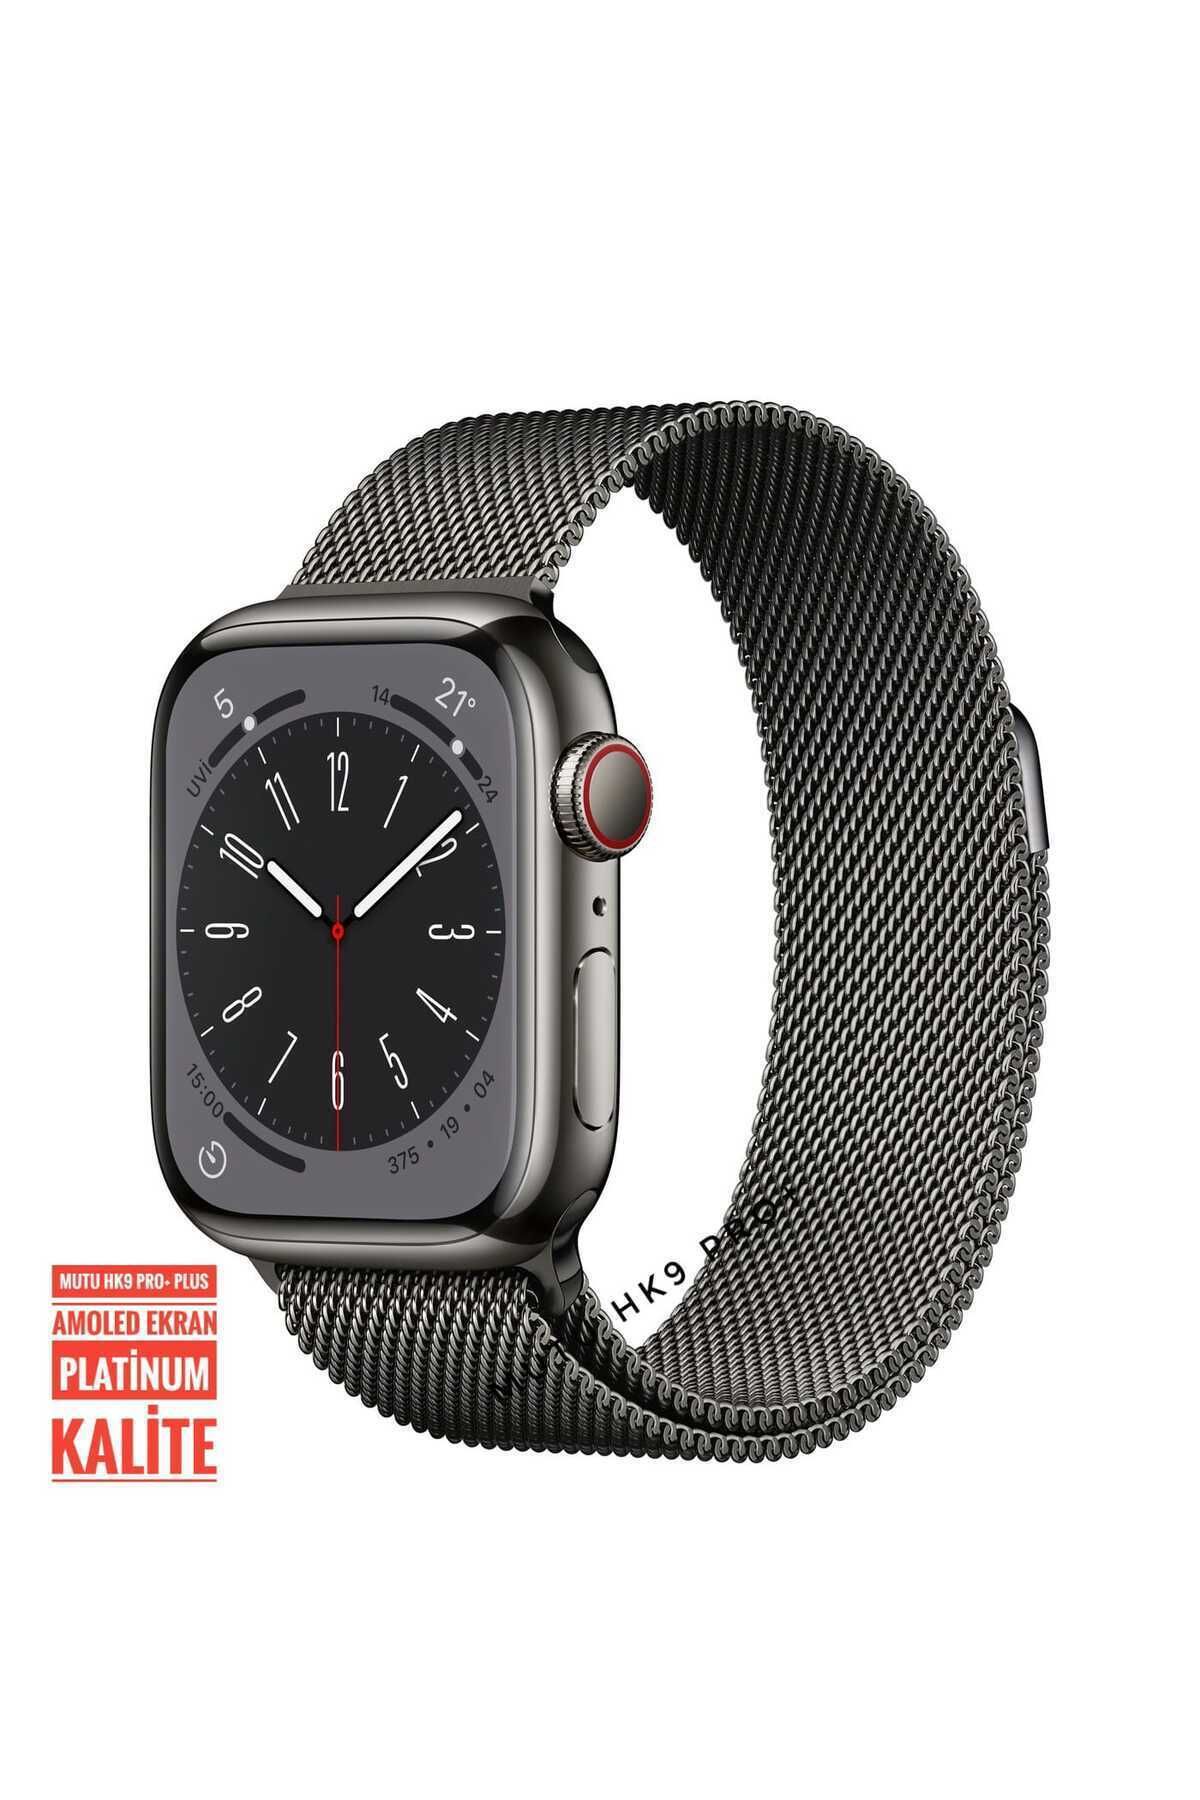 MUTU Hk9 Pro Plus Platinum Orijinal Son Versiyon Watch 9 Amoled Ekran Akıllı Saat Smartwatch (3 Kordon)